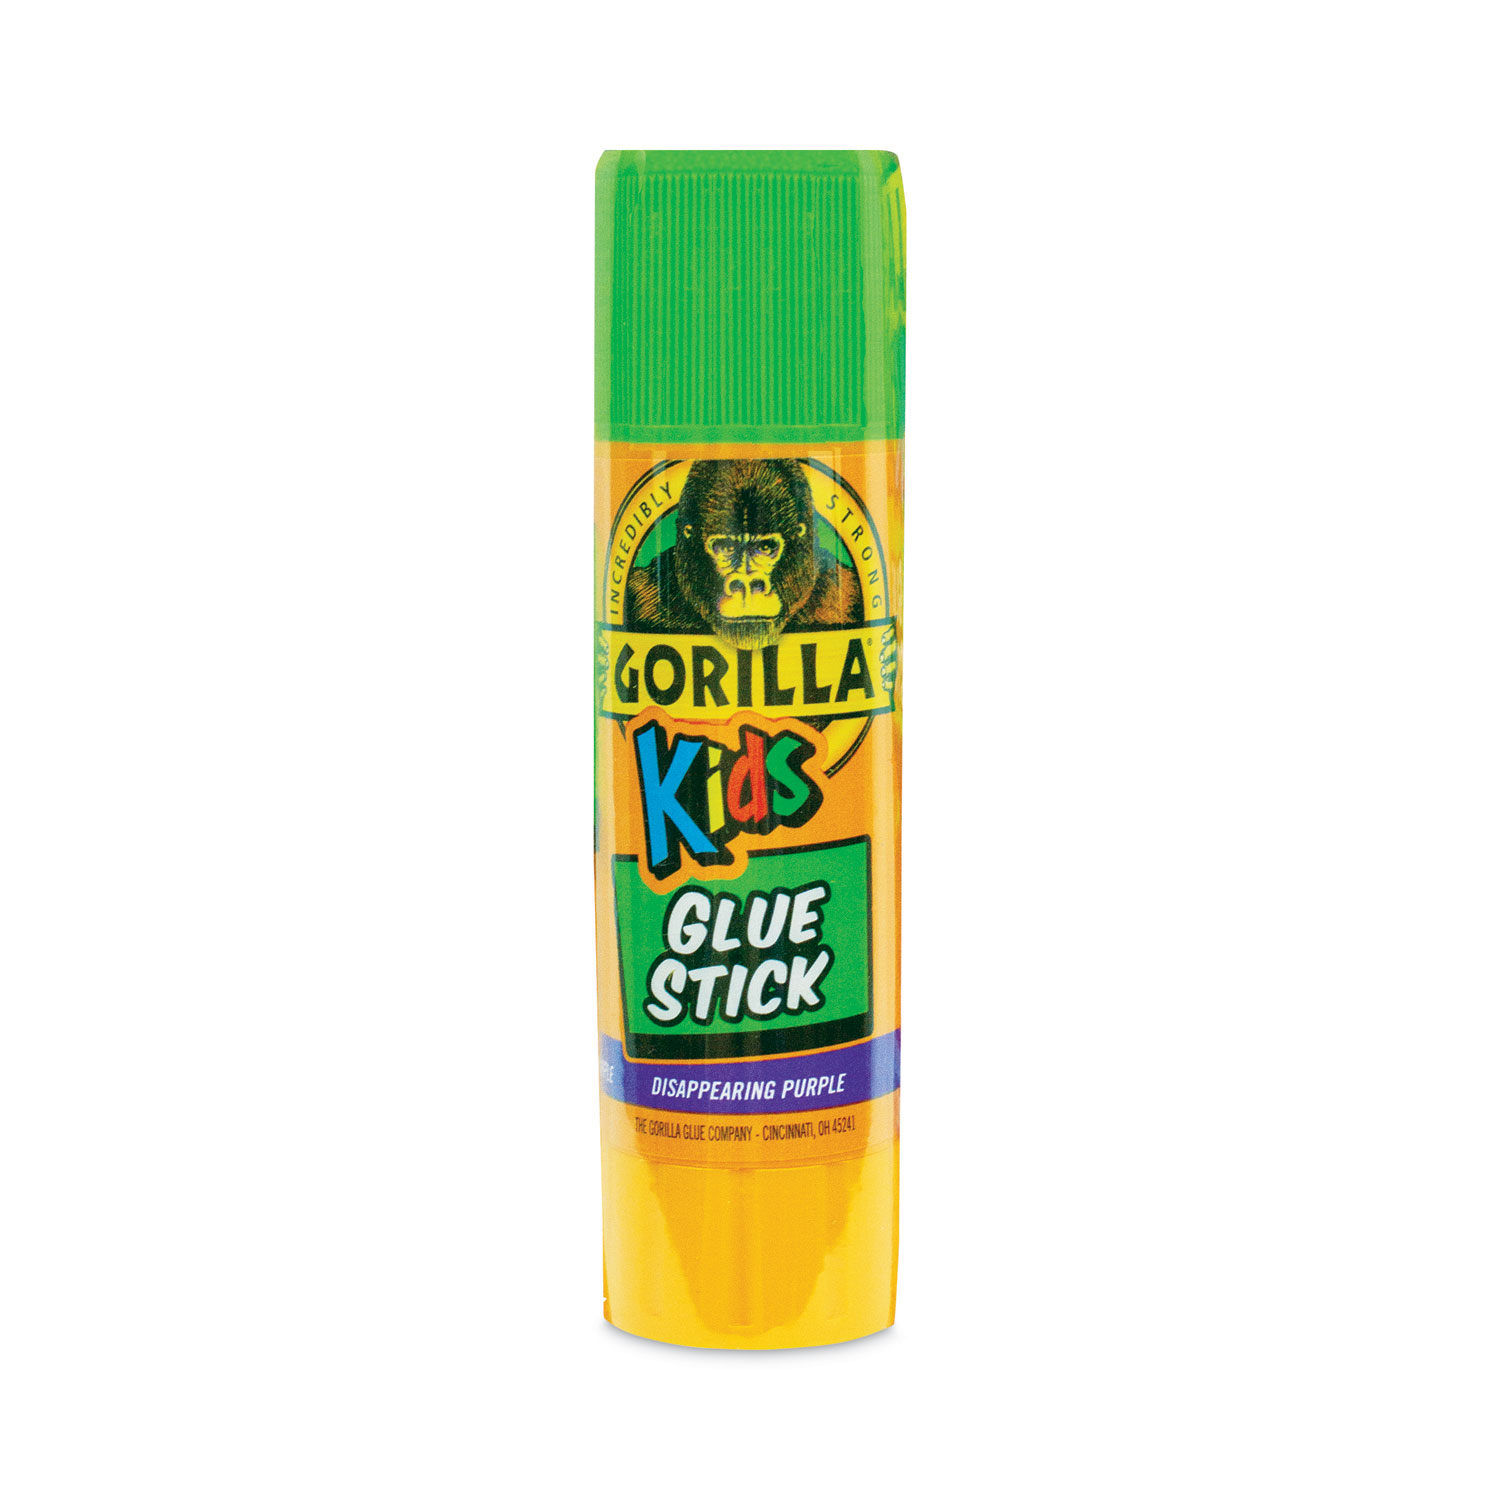 Gorilla 4 oz. Dries Clear Wood Glue (6-pack)